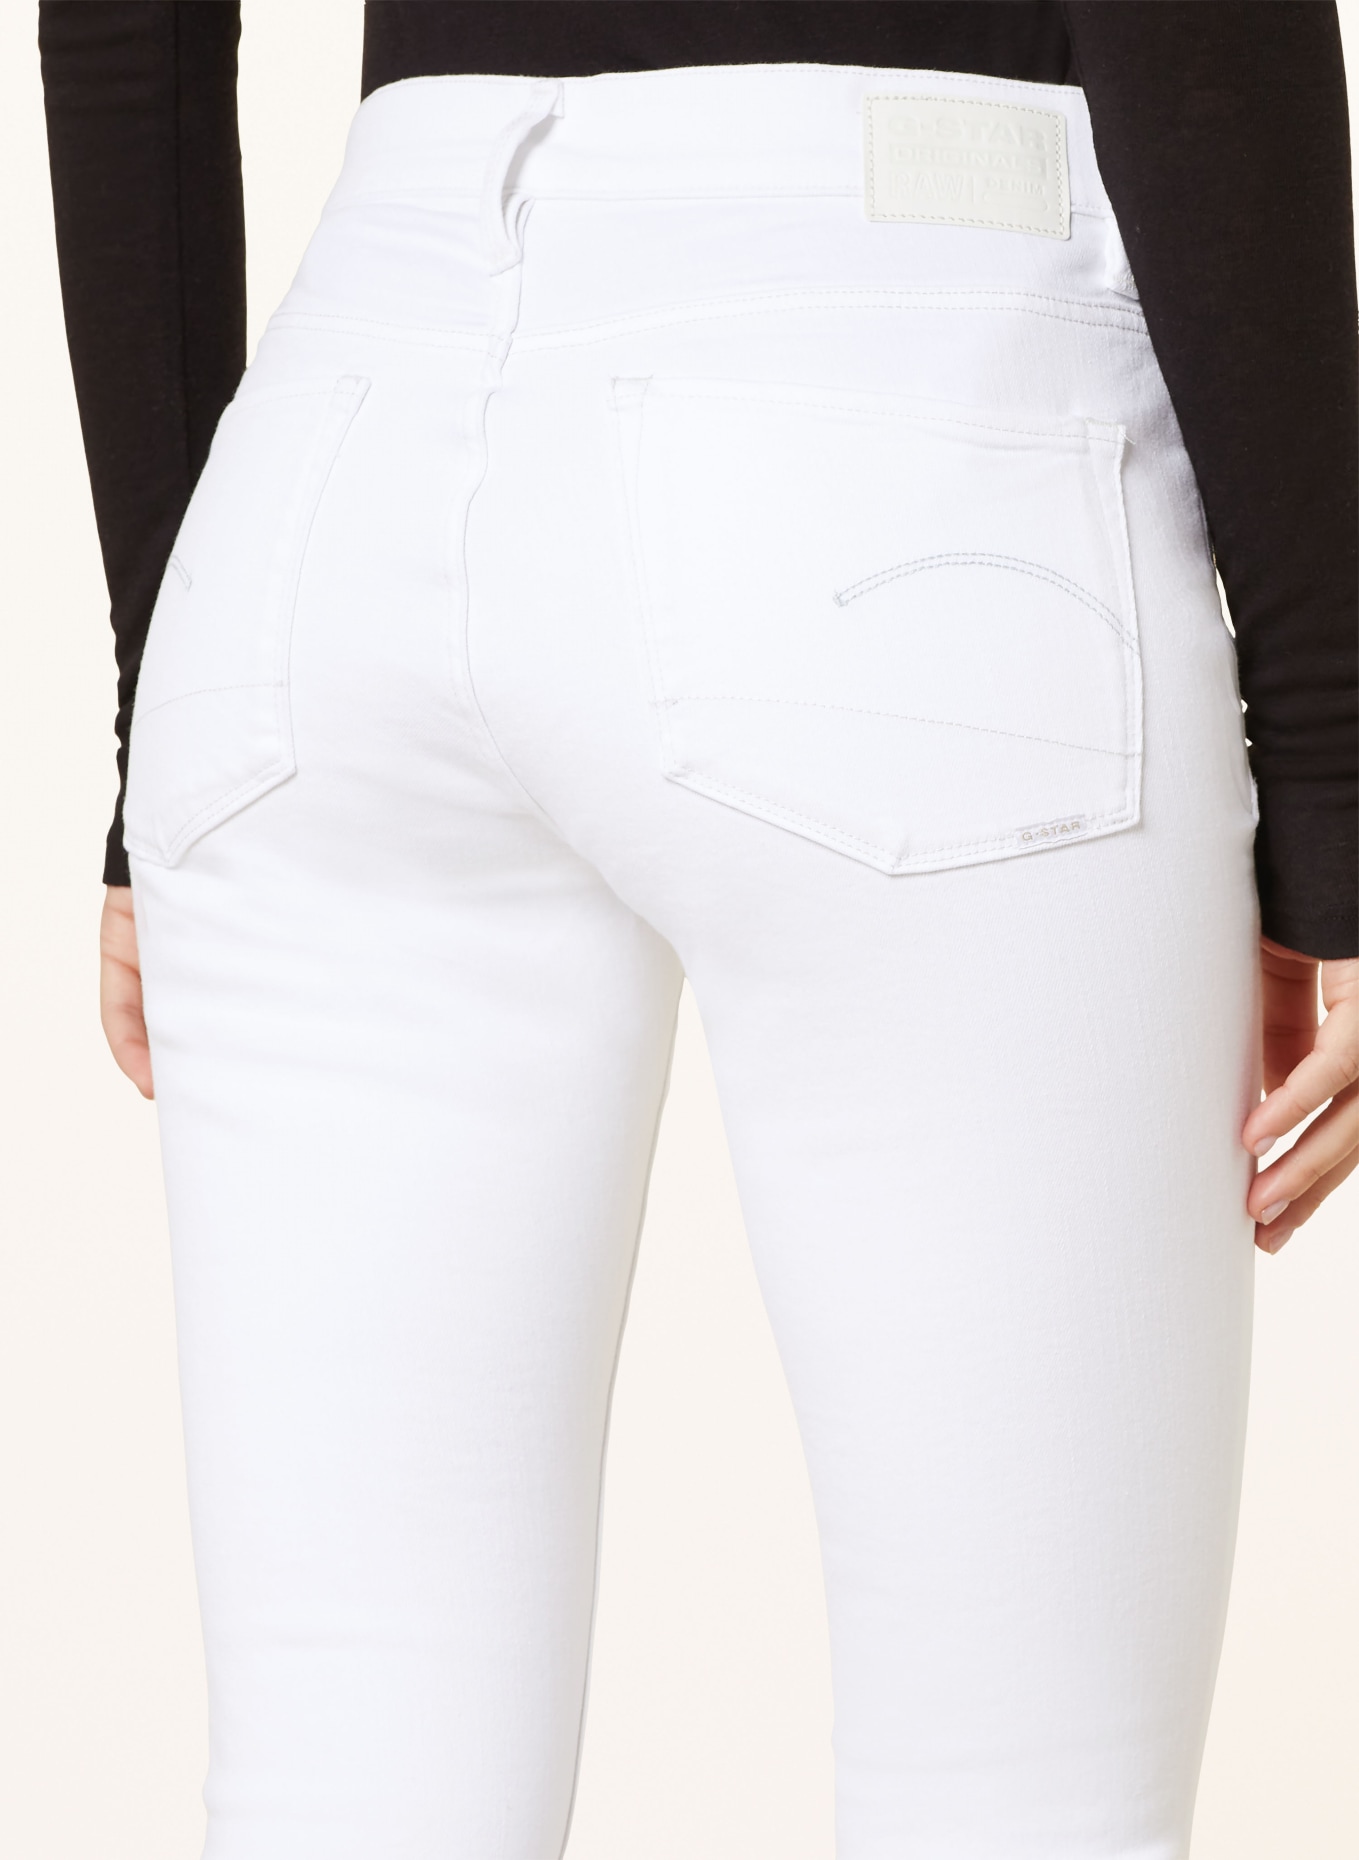 G-Star RAW Skinny Jeans, Farbe: G547 paper white gd (Bild 5)